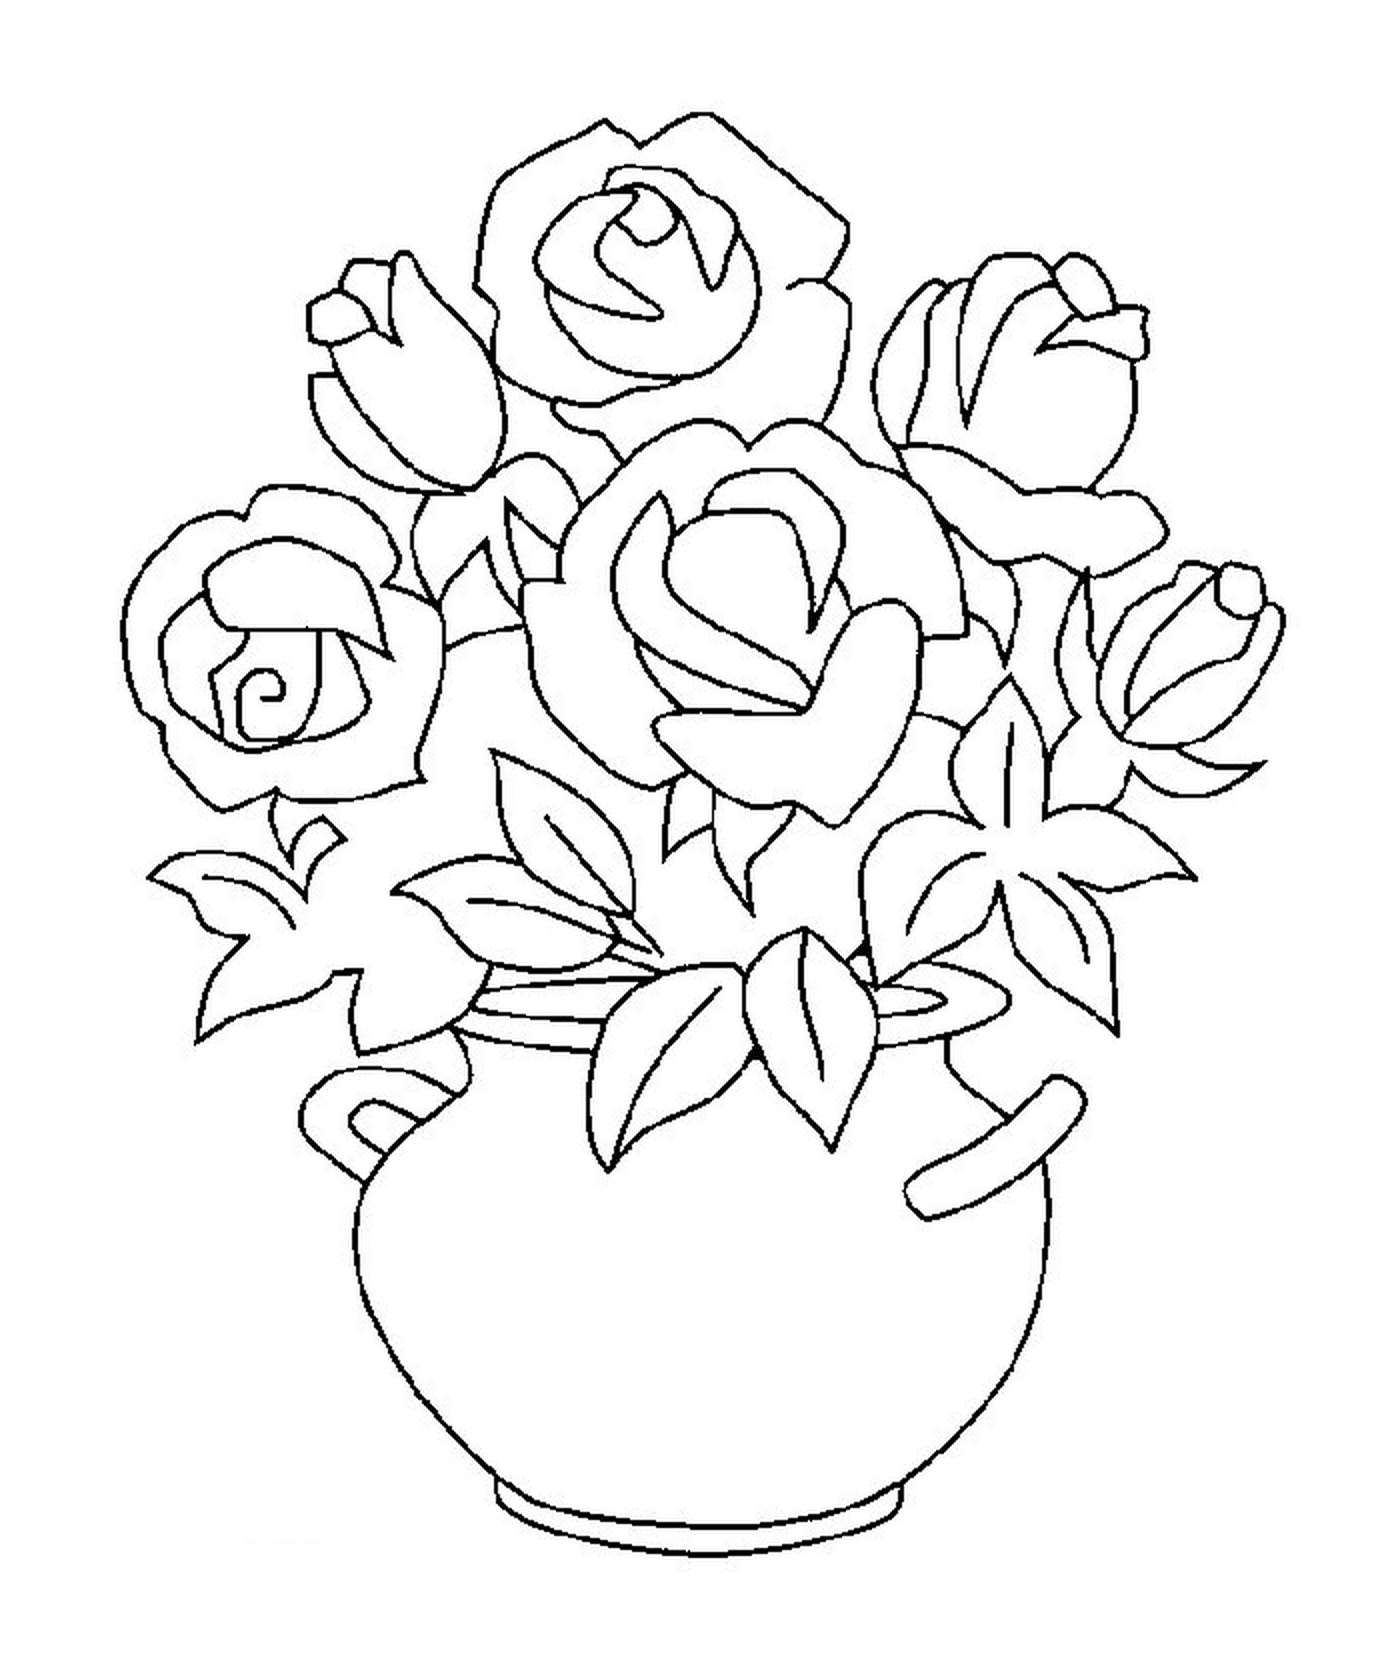  A vase of roses 